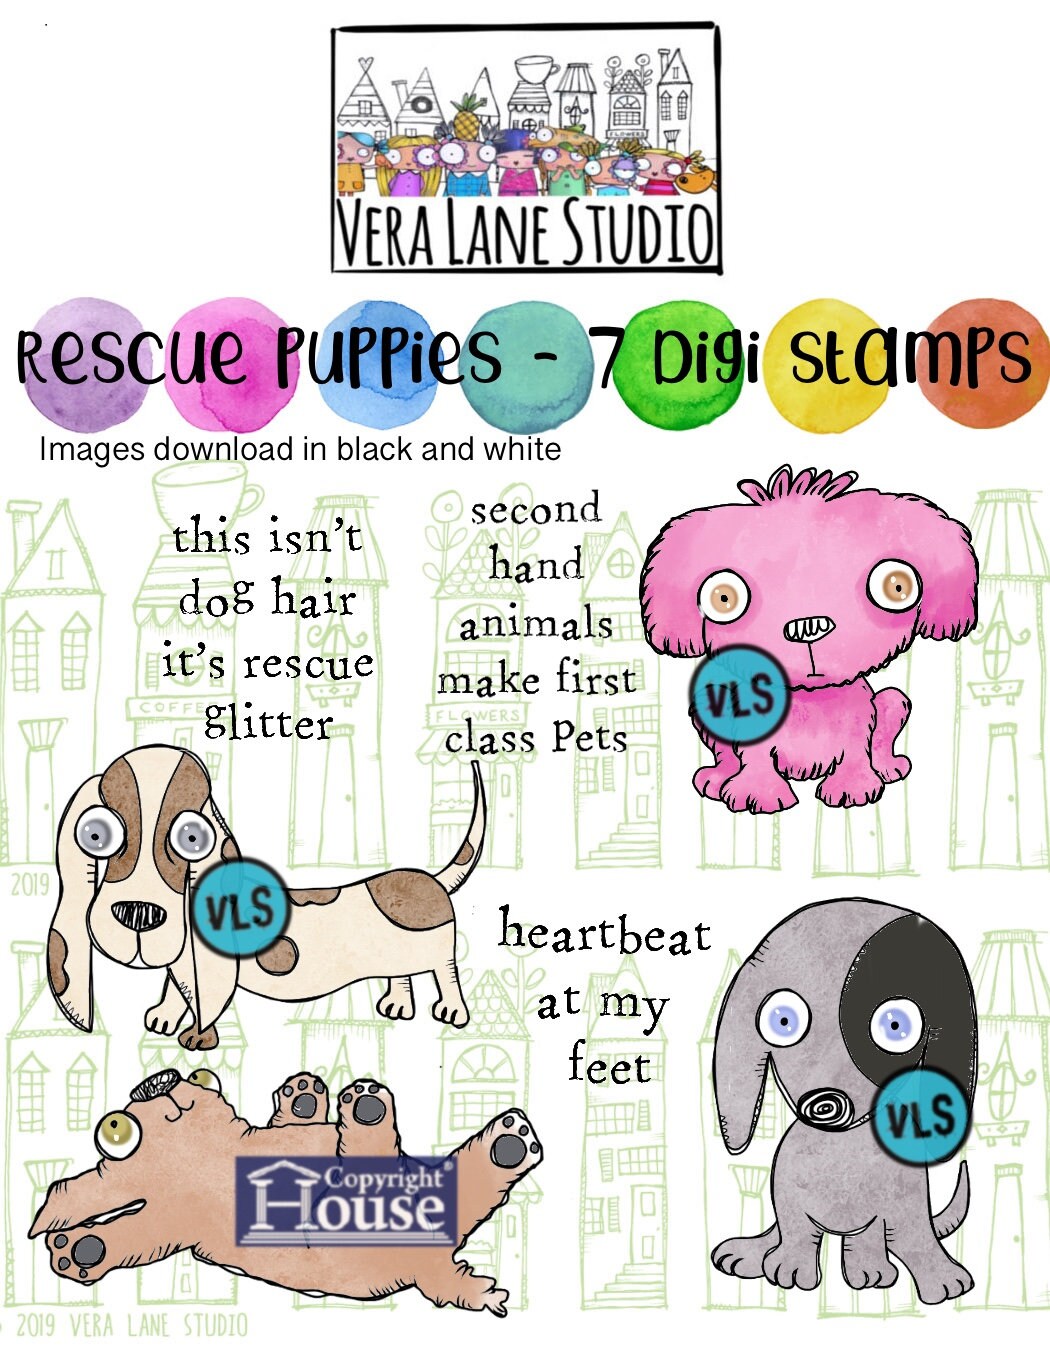 Rescue Puppies - 7 digi stamp set